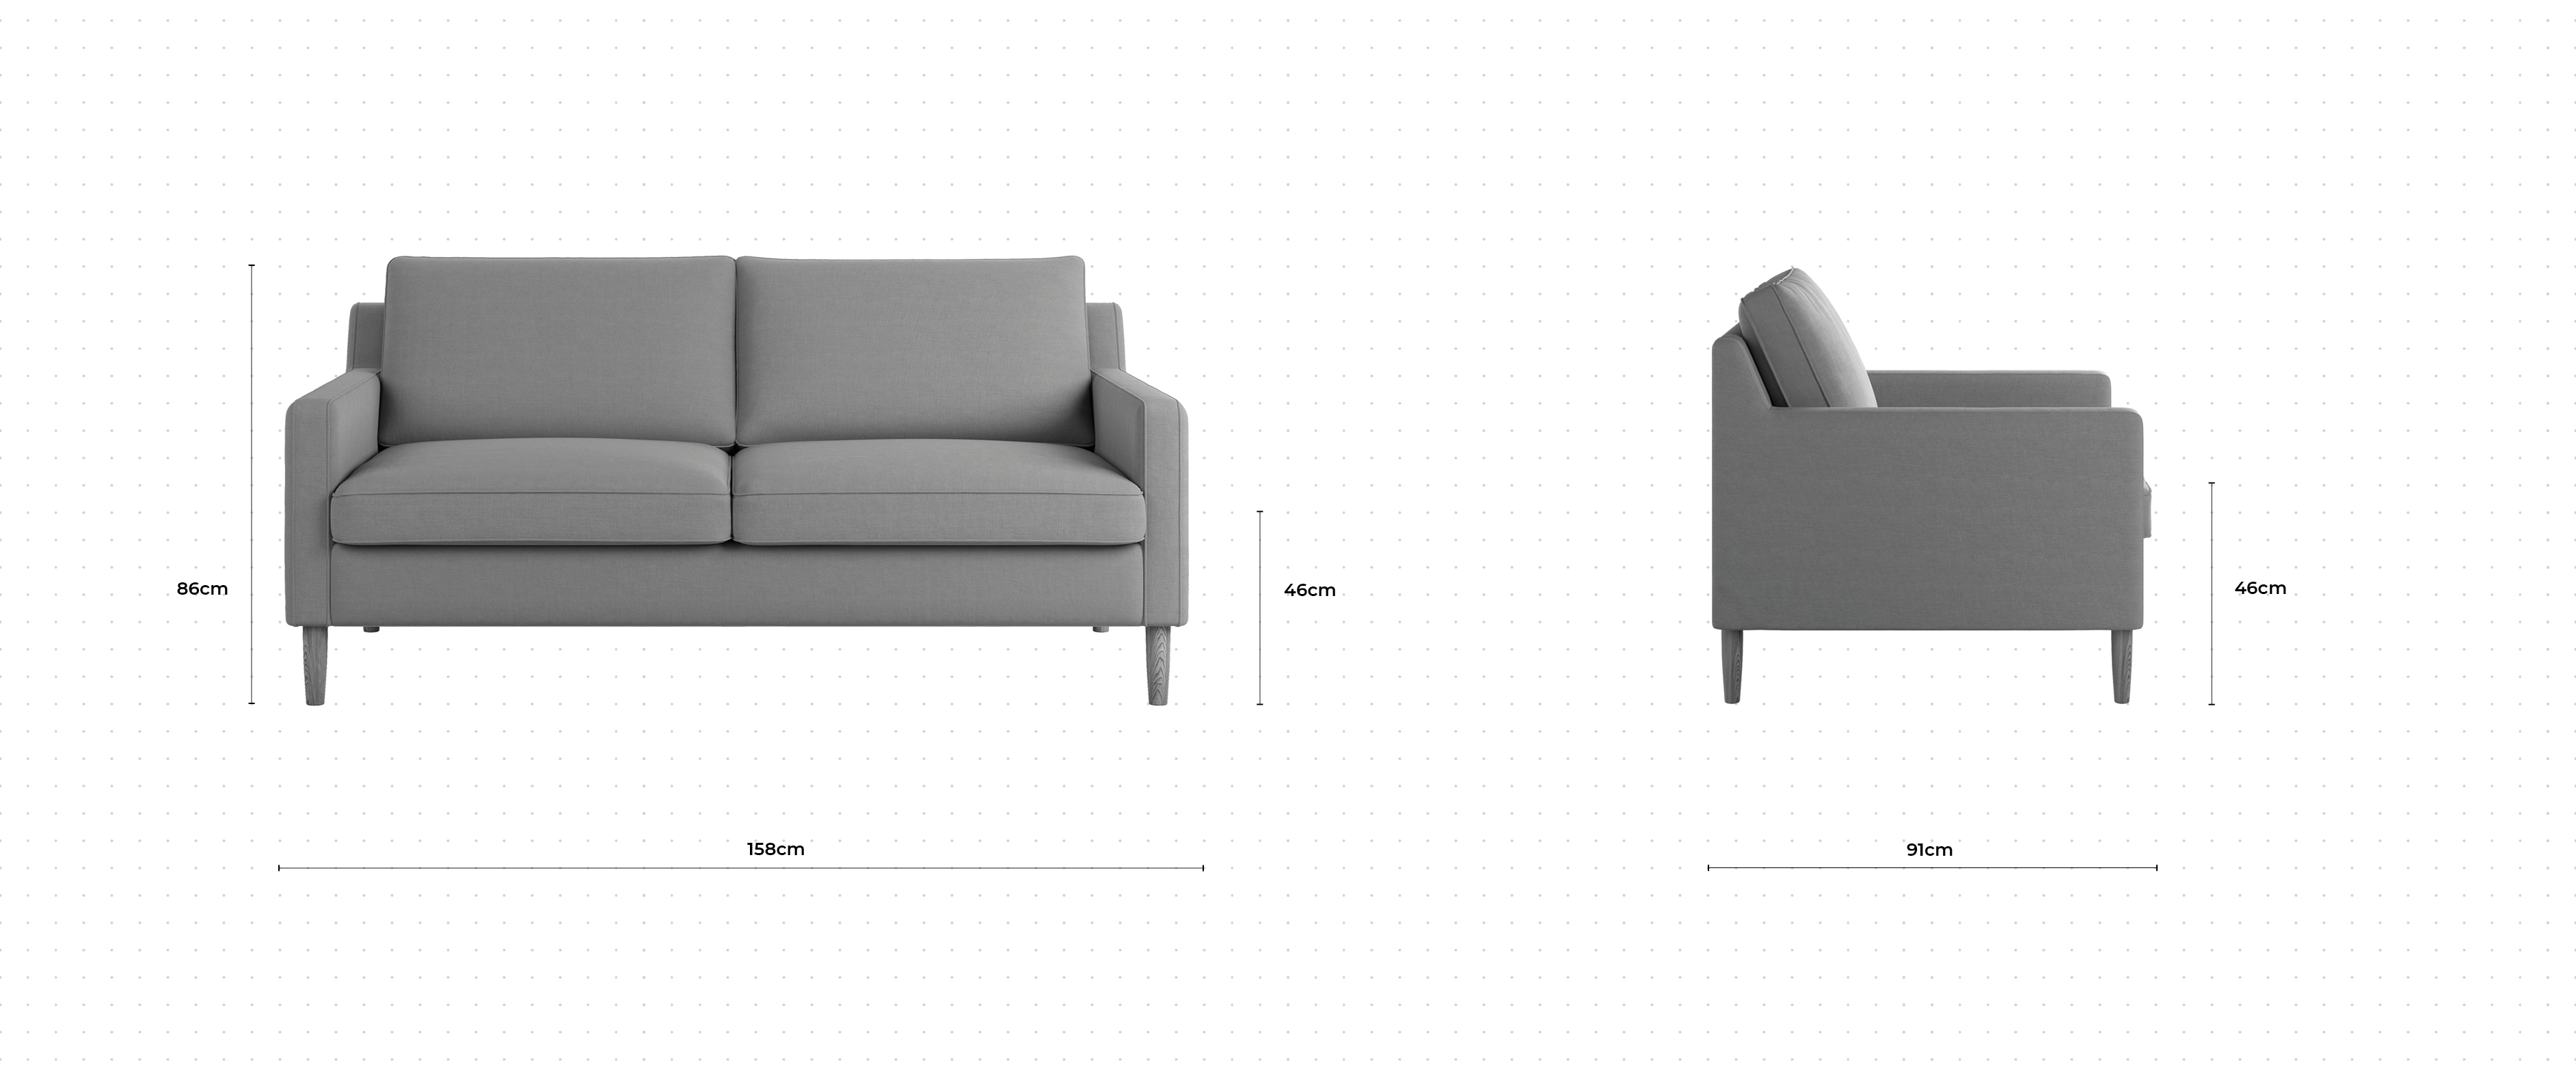 Morley 2 Seater Sofa dimensions